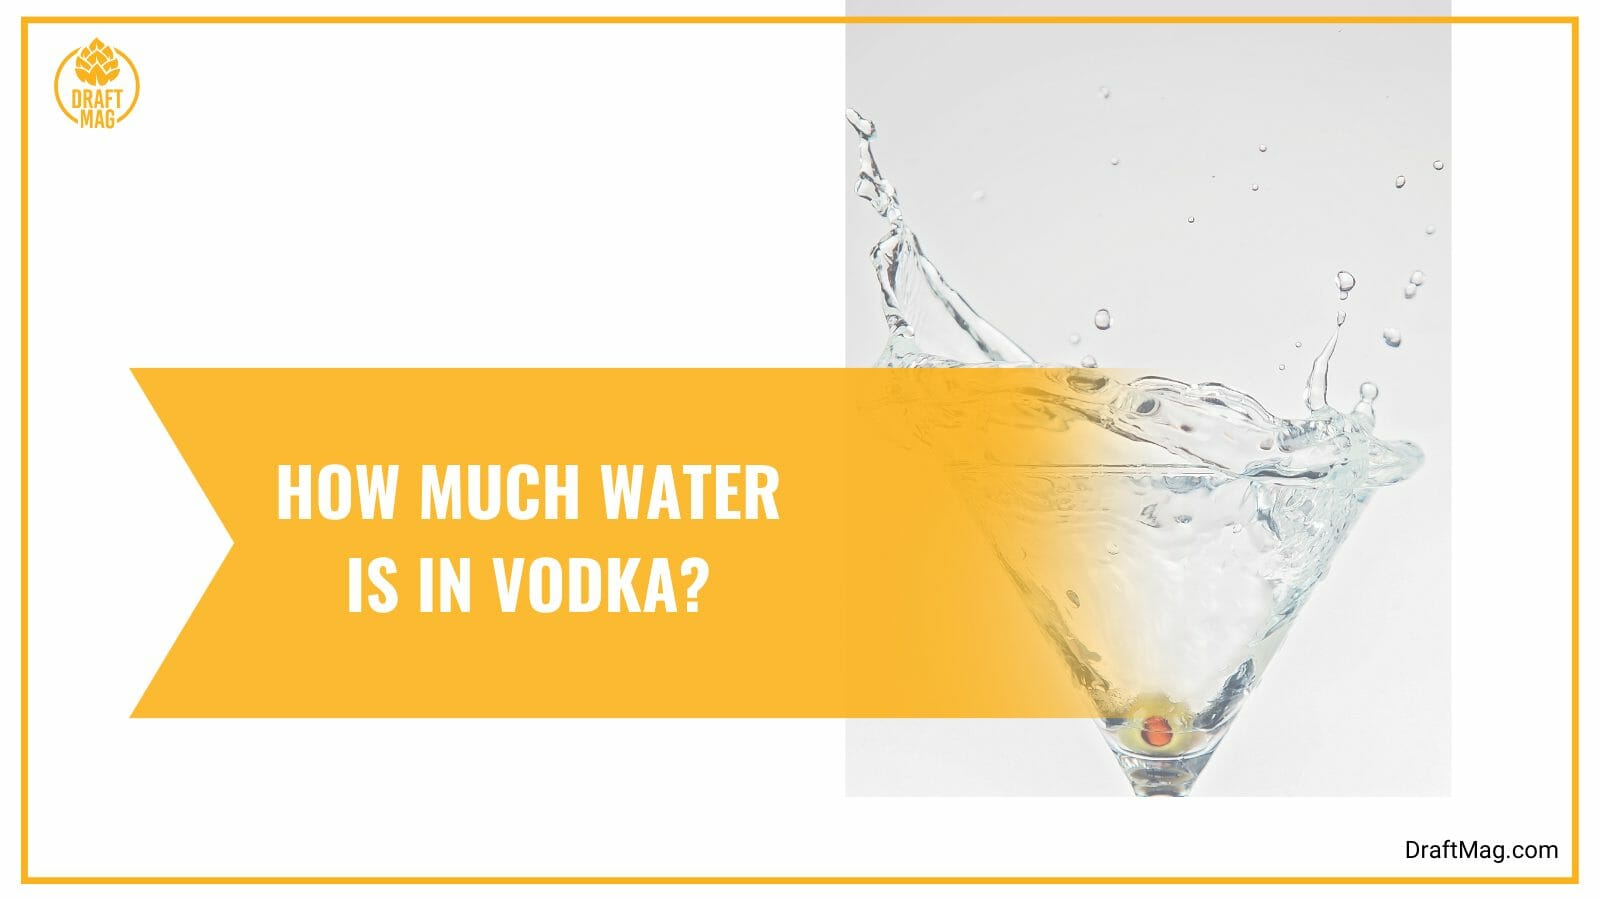 Water in vodka